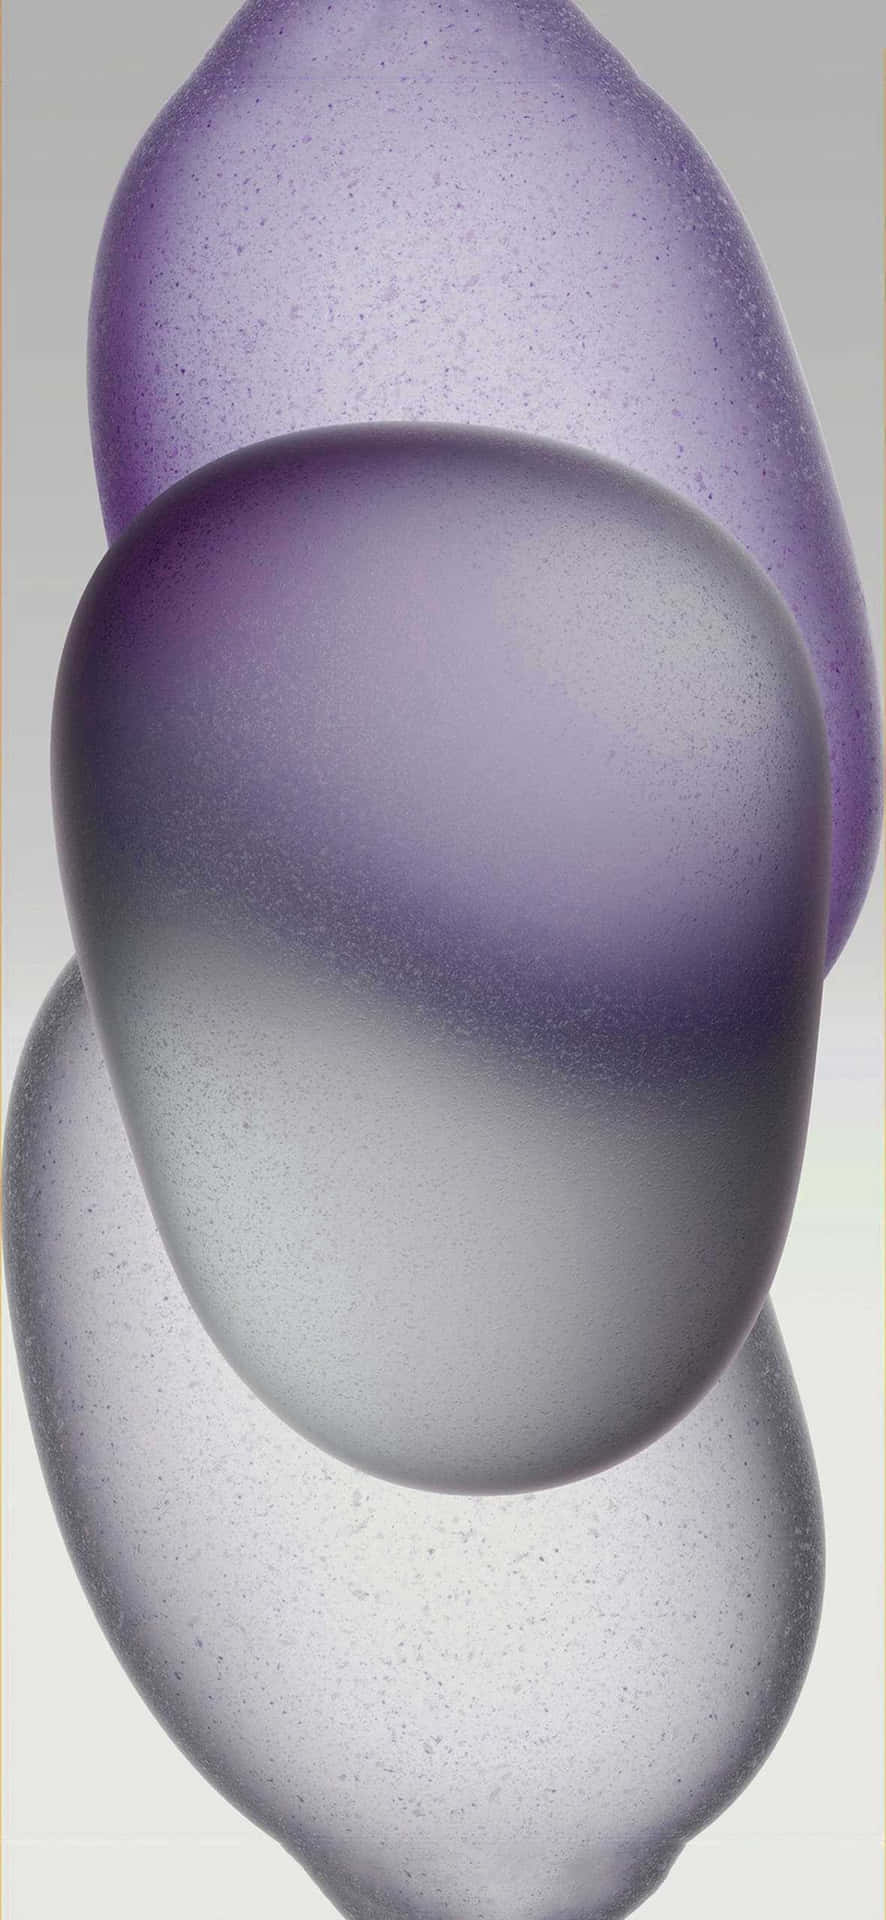 Abstract Purple Stones Gradient Background Wallpaper